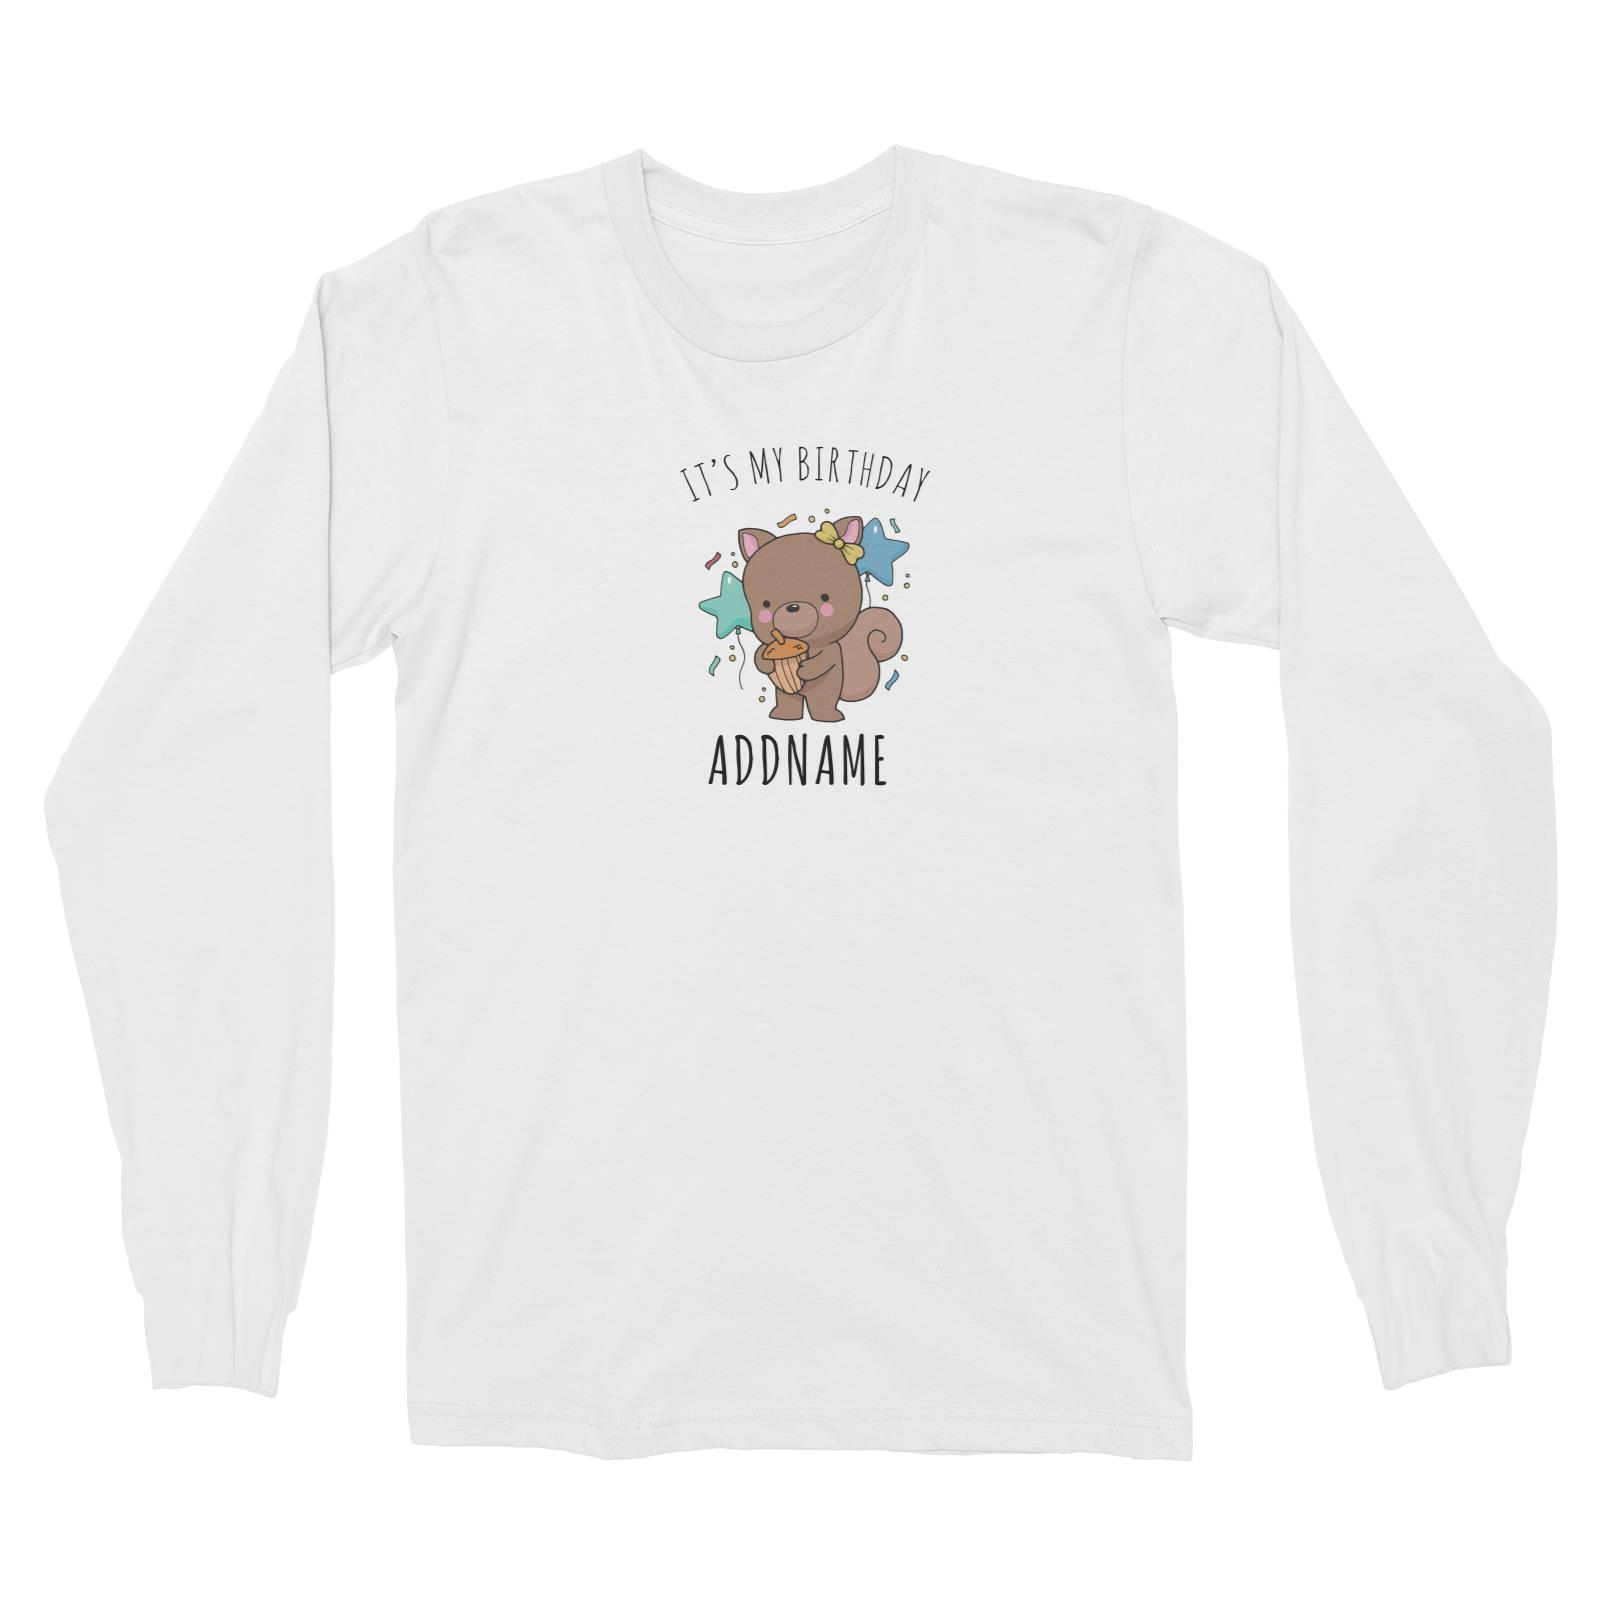 Birthday Sketch Animals Squirrel with Acorn It's My Birthday Addname Long Sleeve Unisex T-Shirt